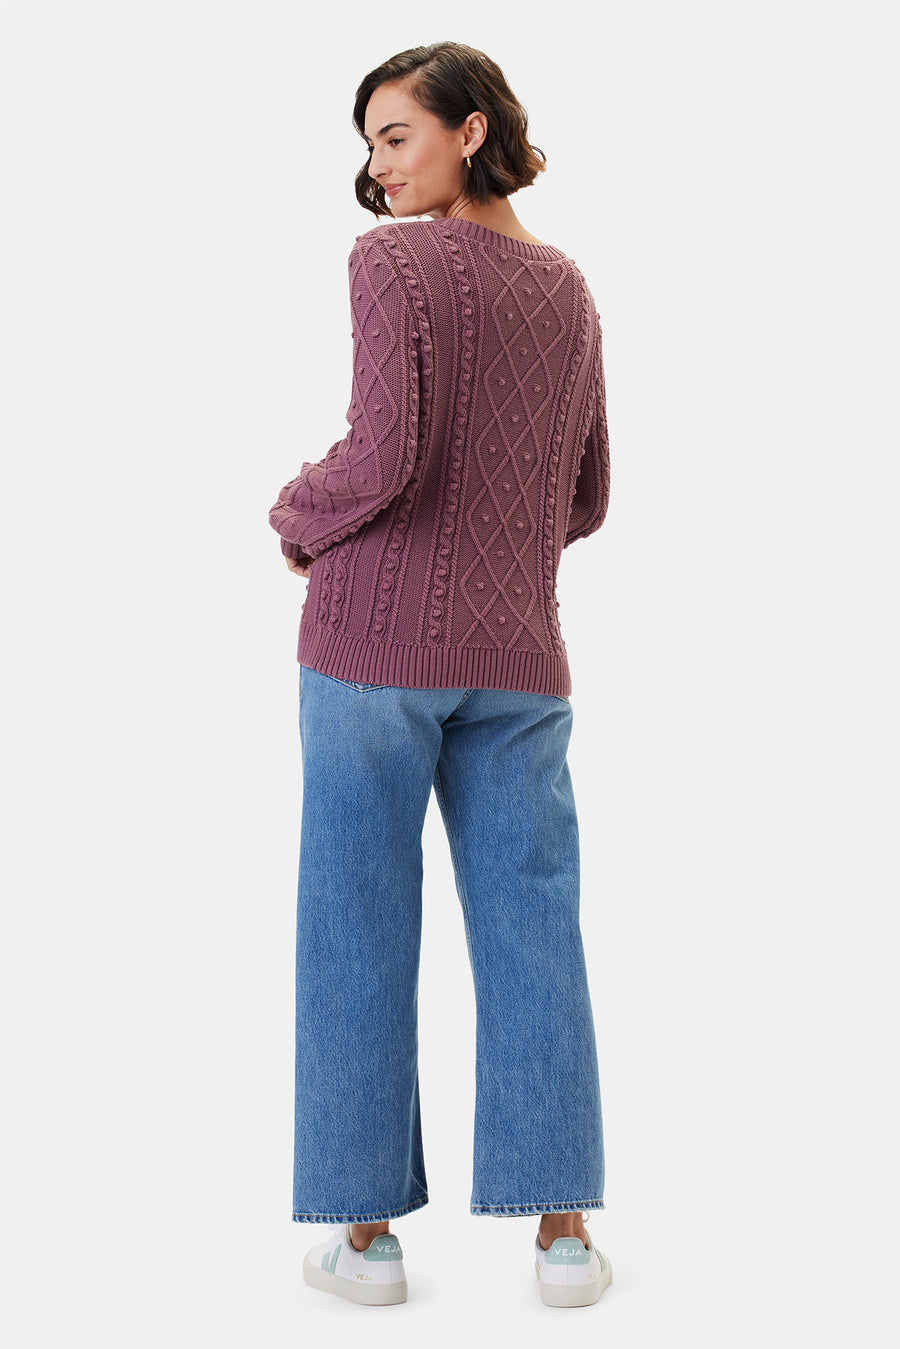 Faedra Organic Cotton Sweater - Mauve